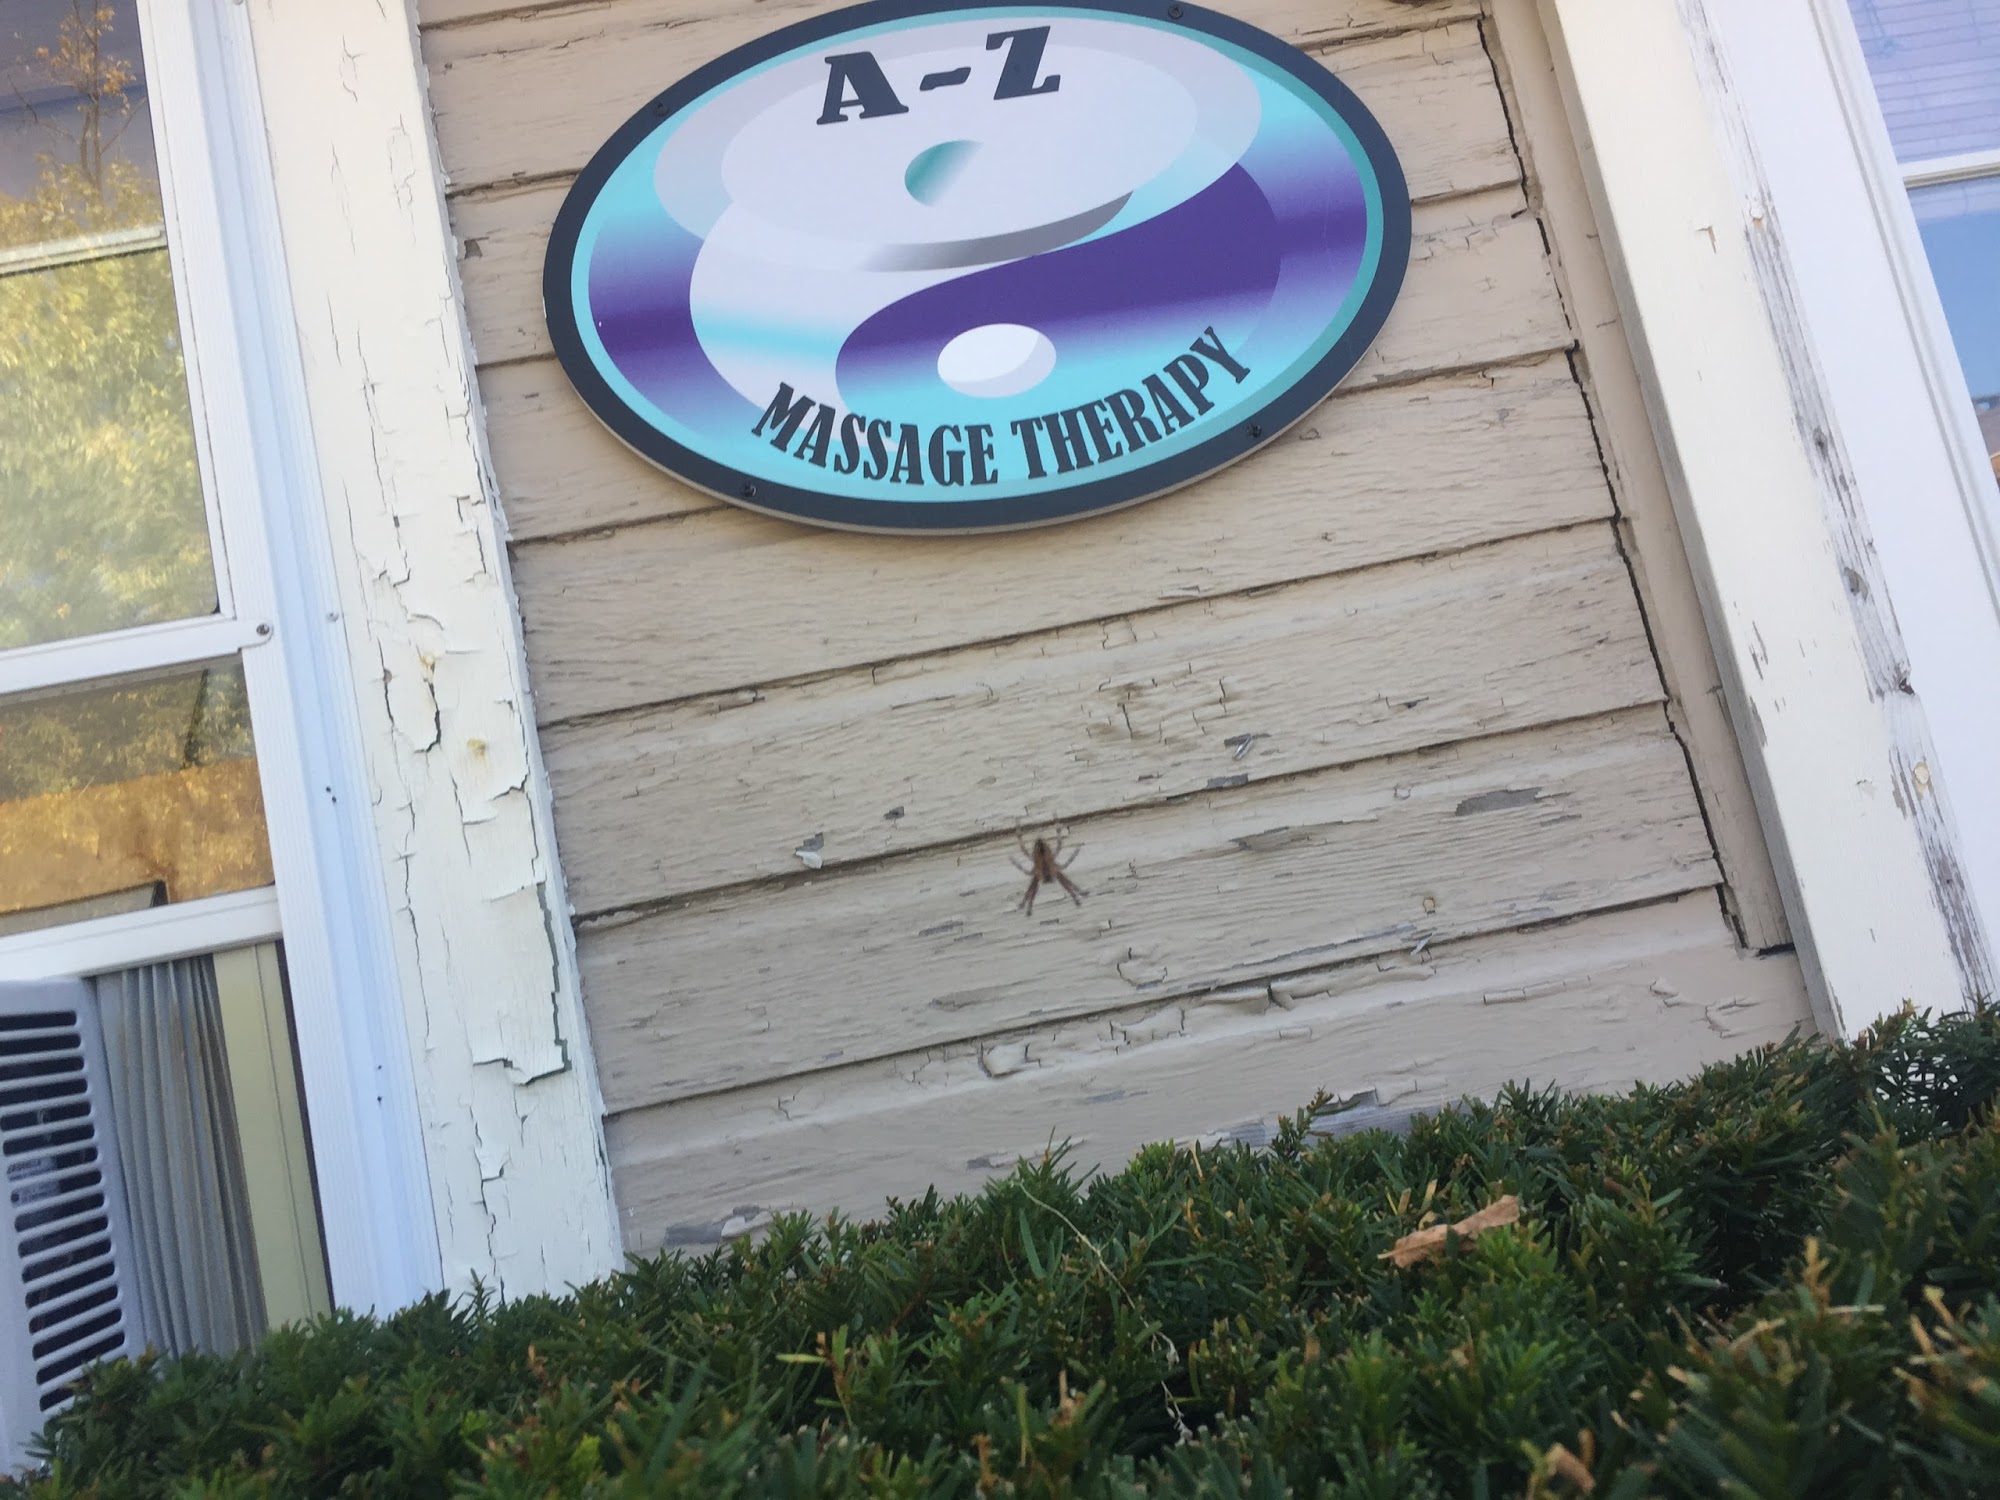 A-Z Massage Therapy